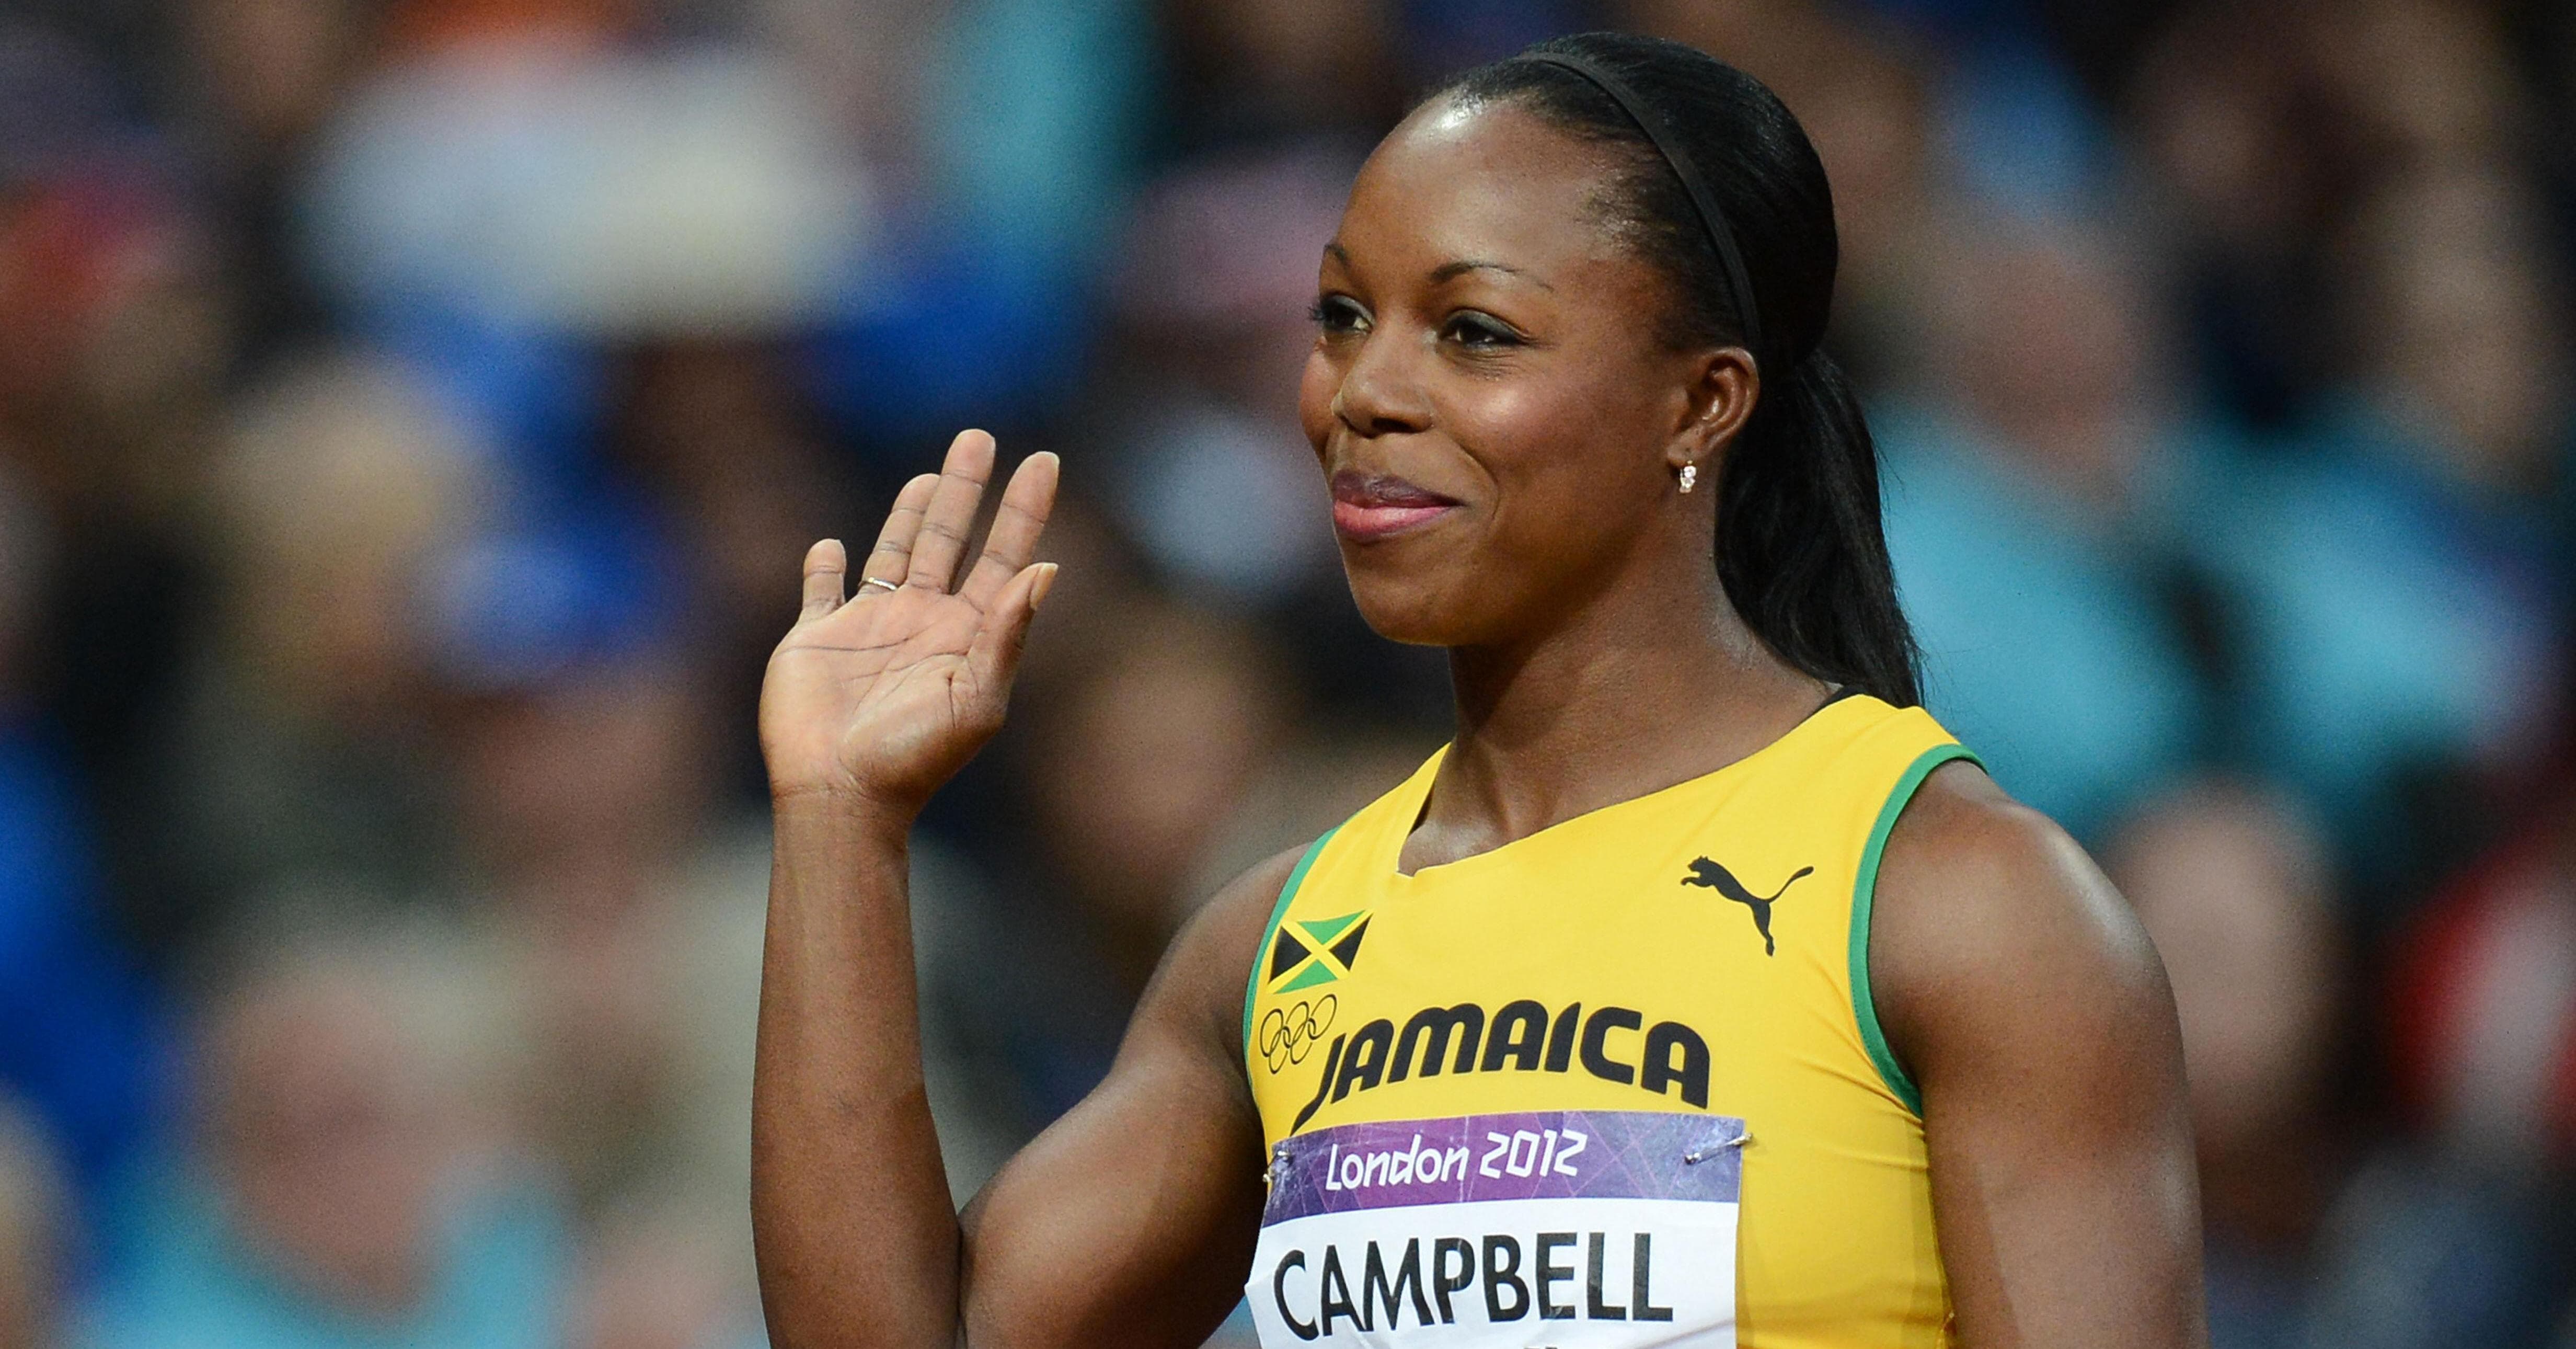 https://imgix.ranker.com/list_img_v2/11213/351213/original/famous-female-athletes-from-jamaica-u1